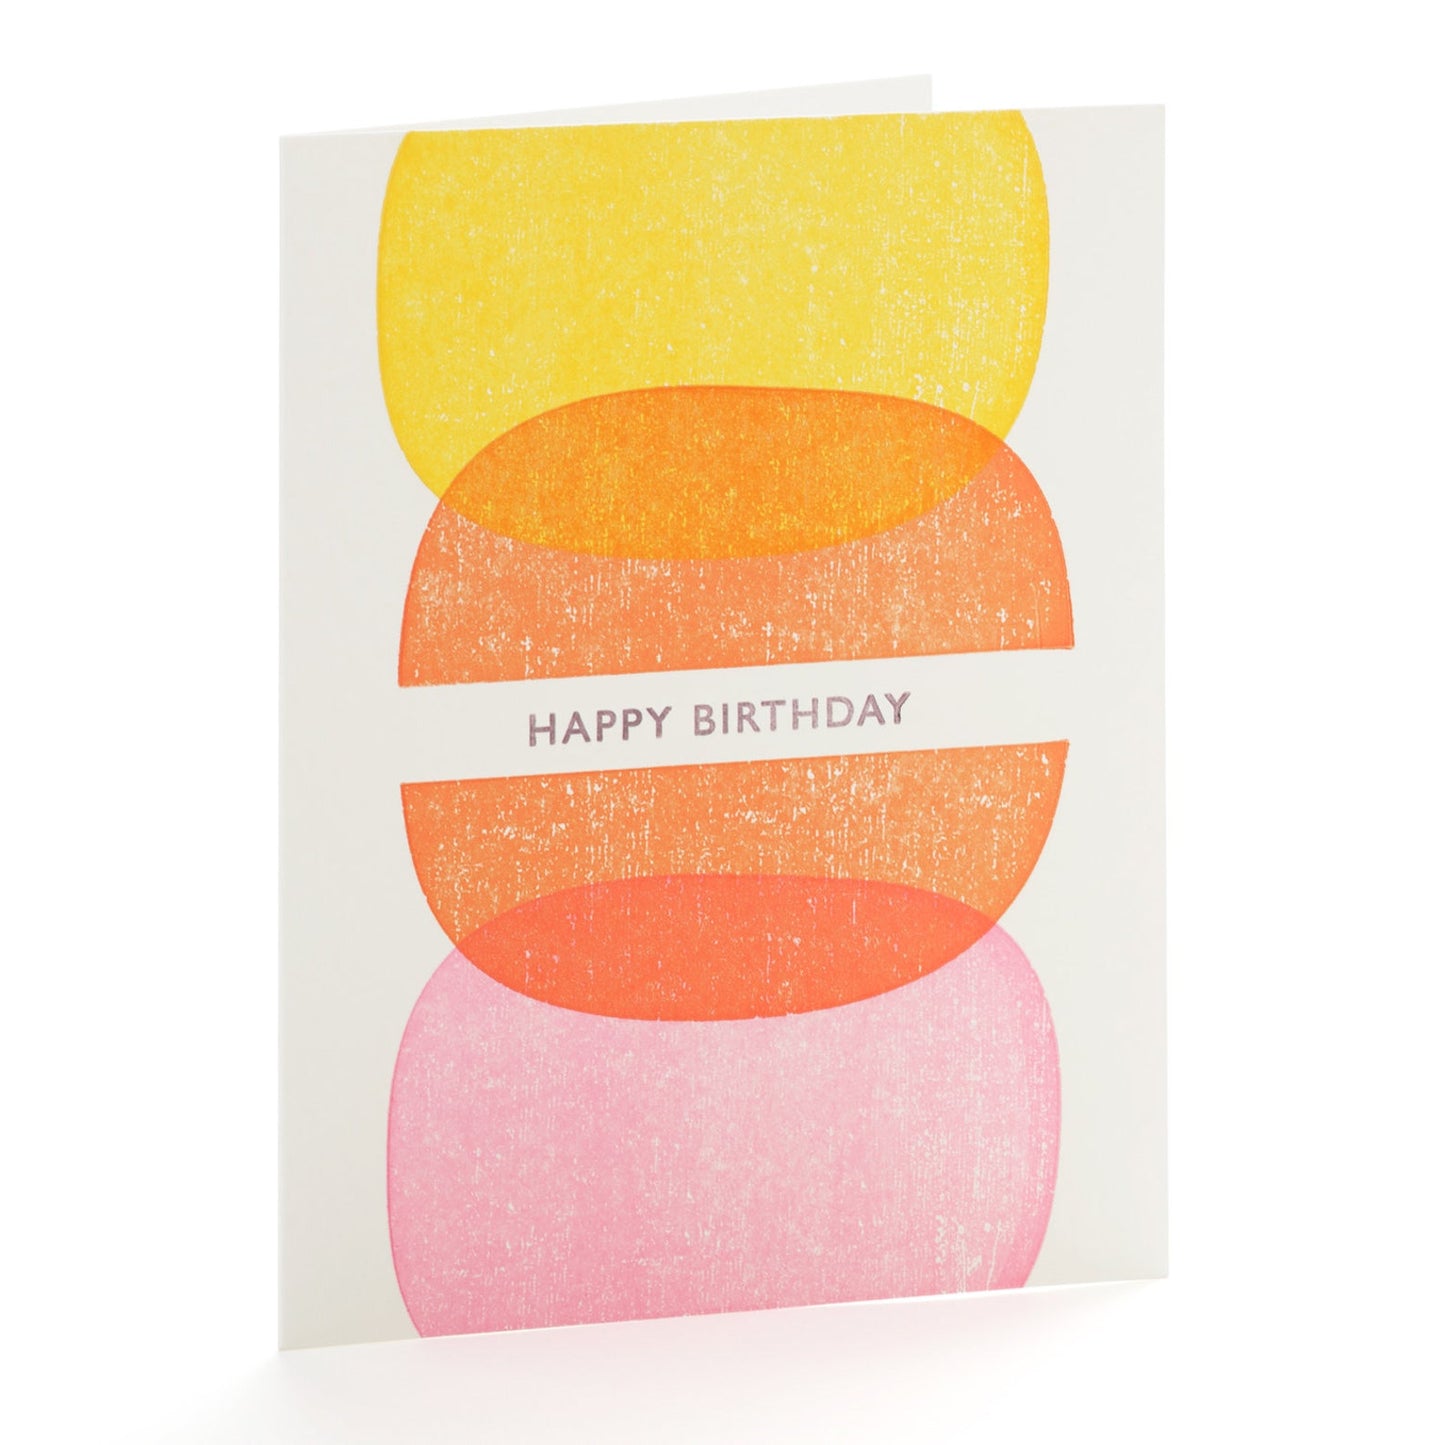 Letterpress Printed Candies Birthday Card